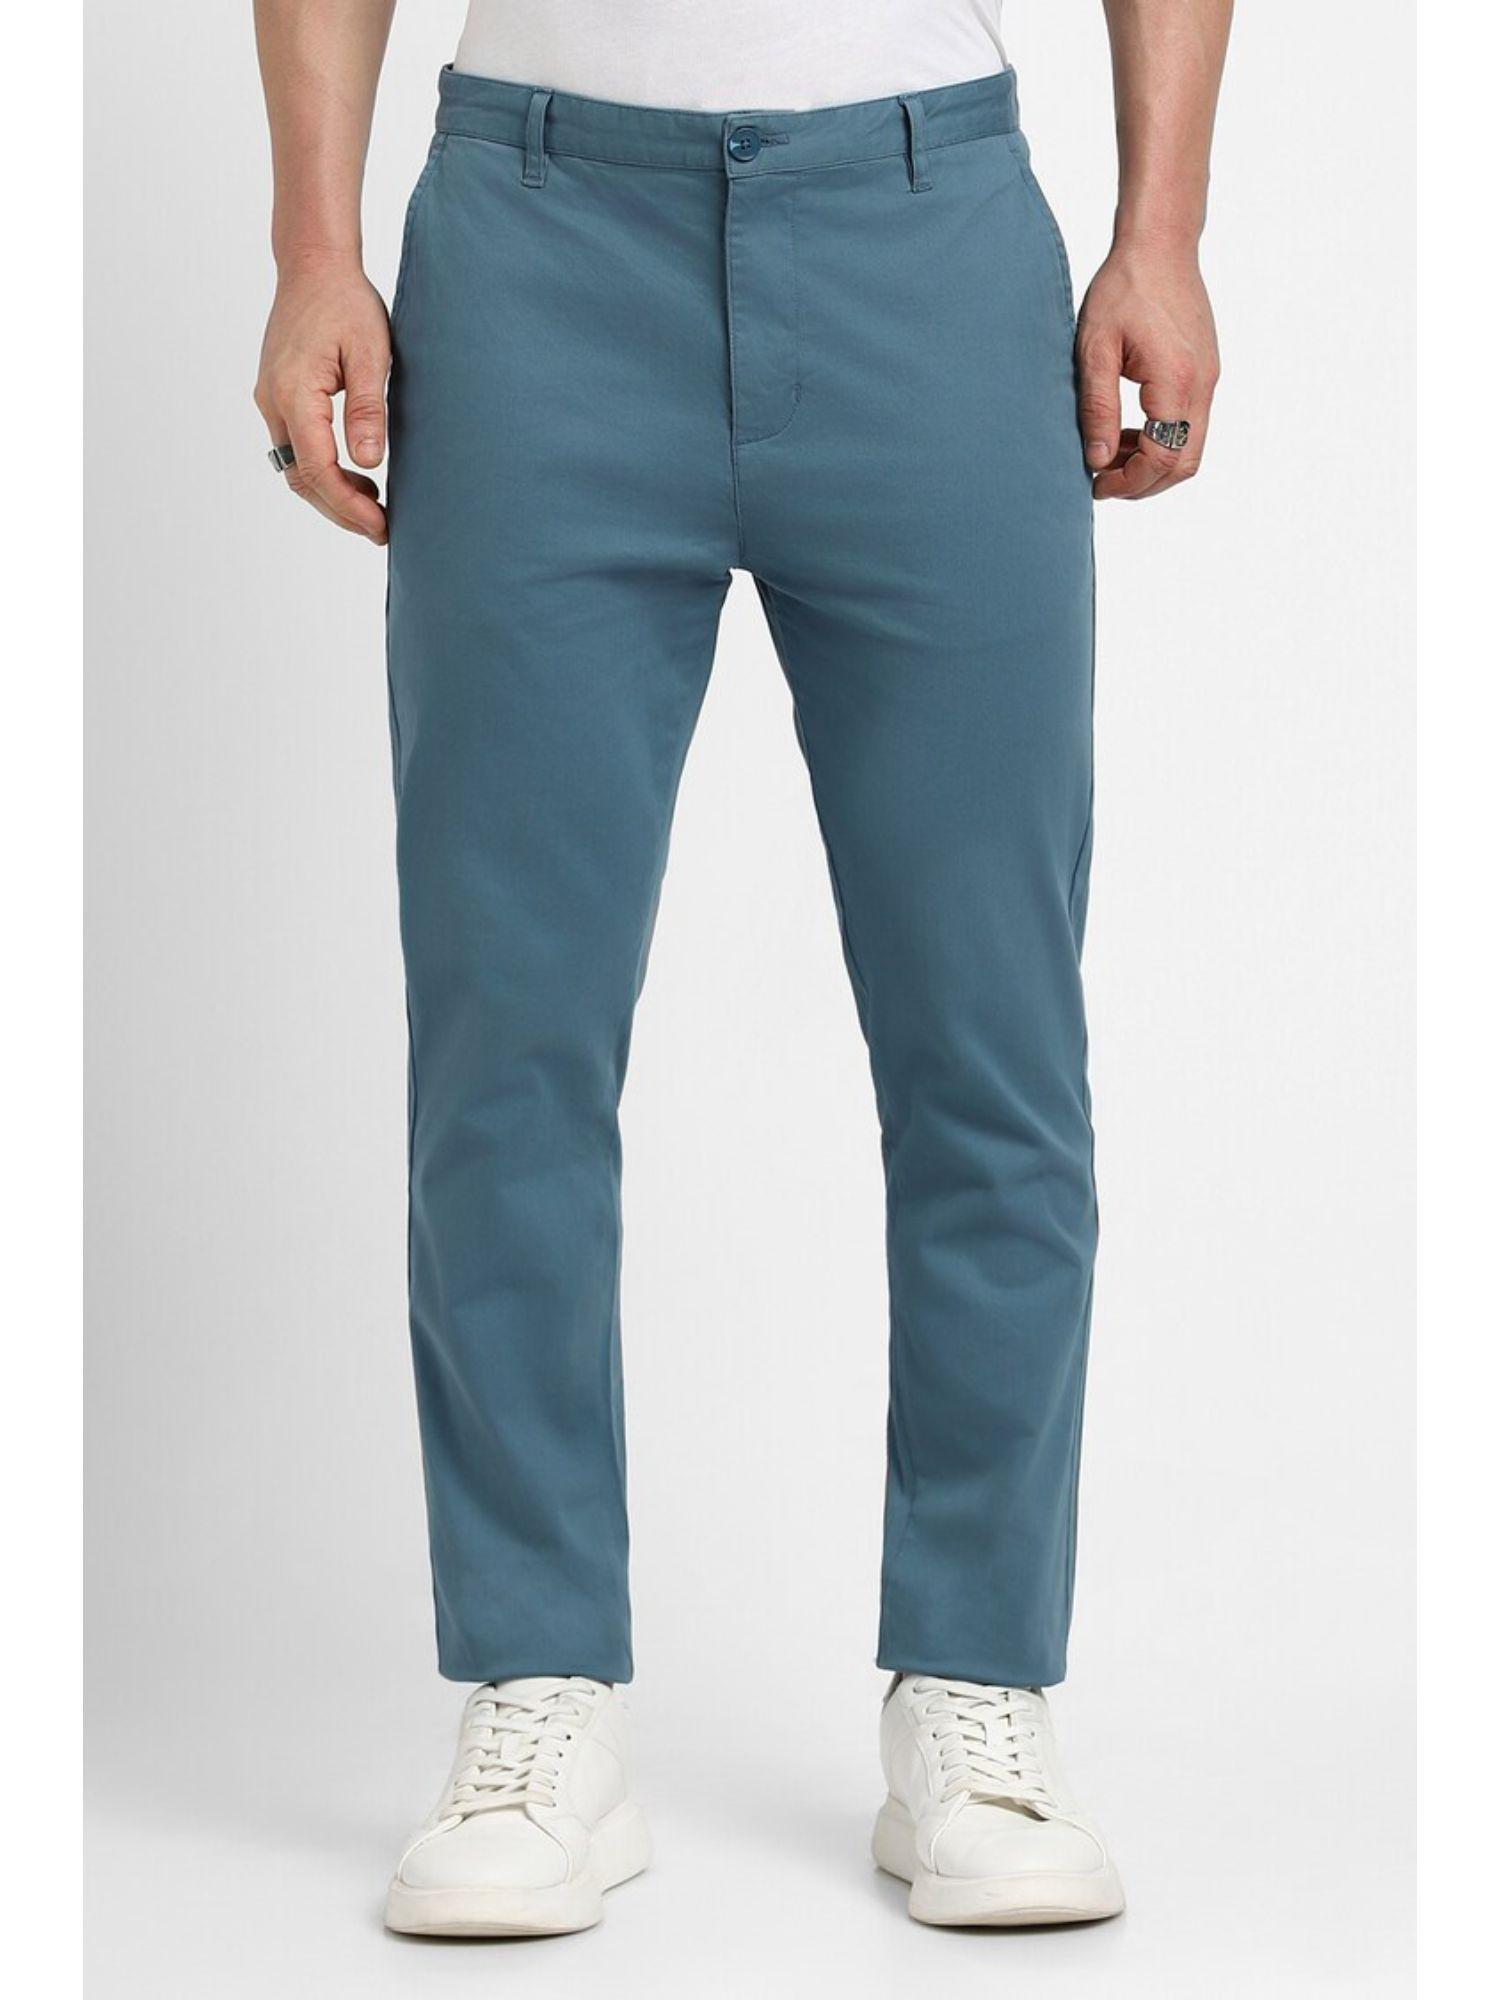 solid blue pants